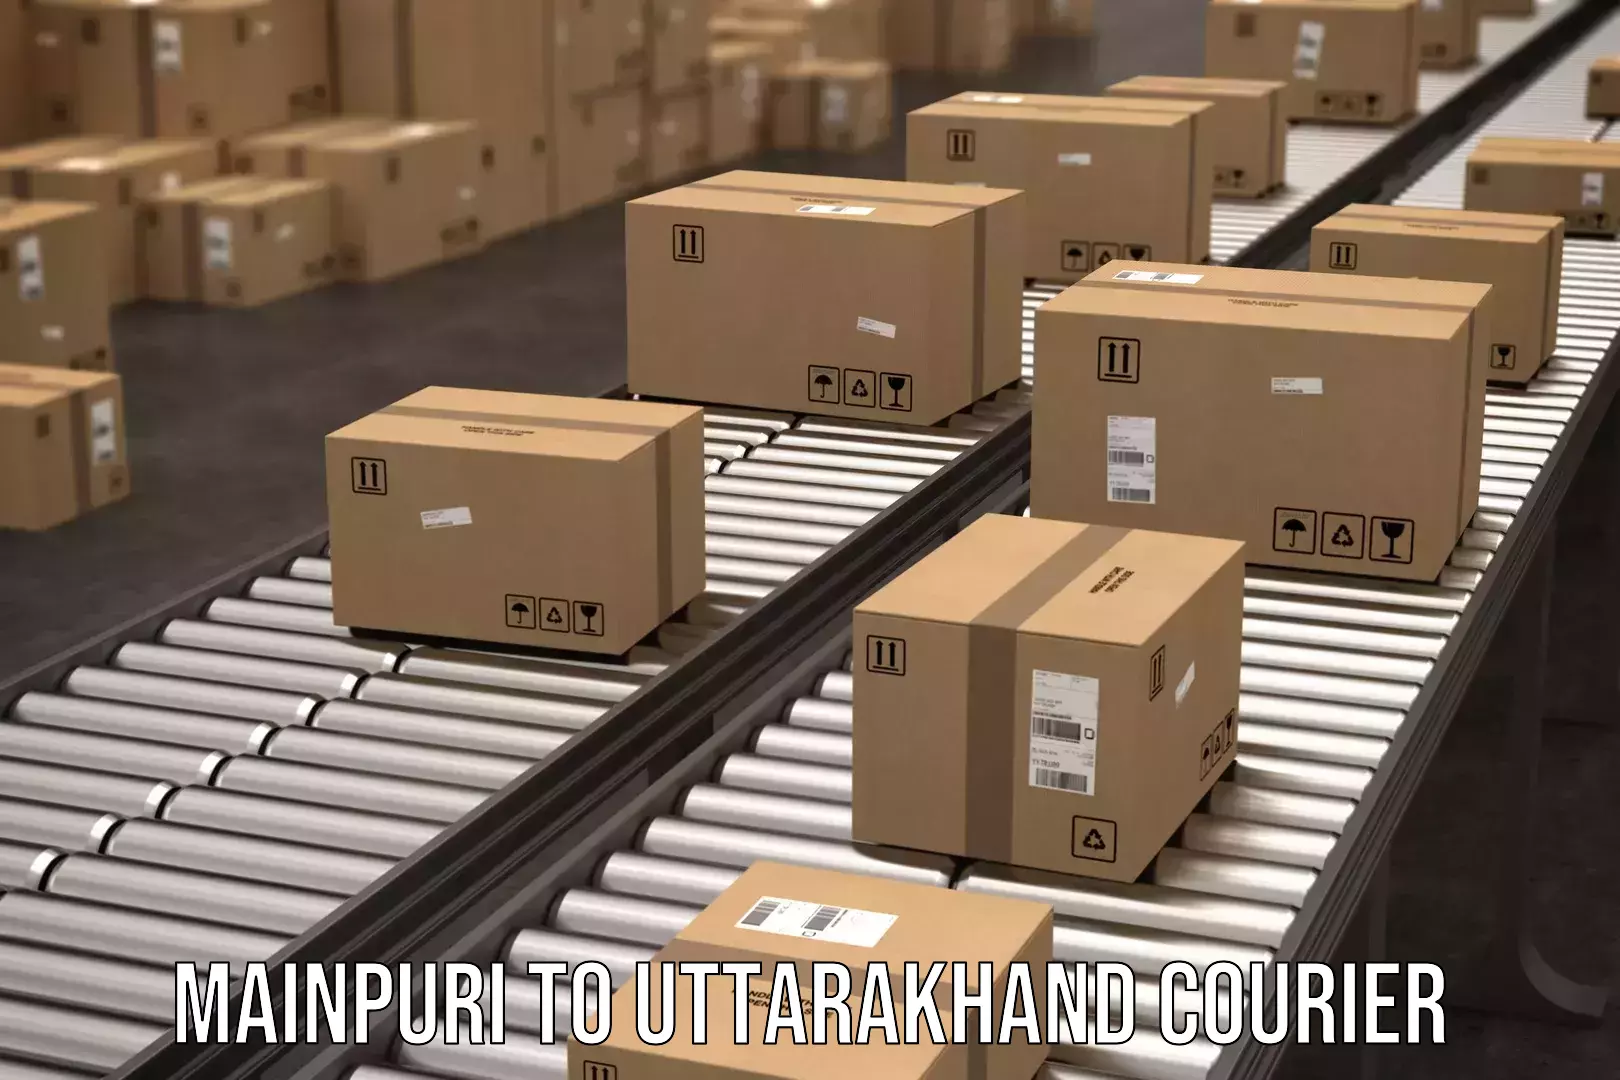 Delivery service partnership Mainpuri to Uttarakhand